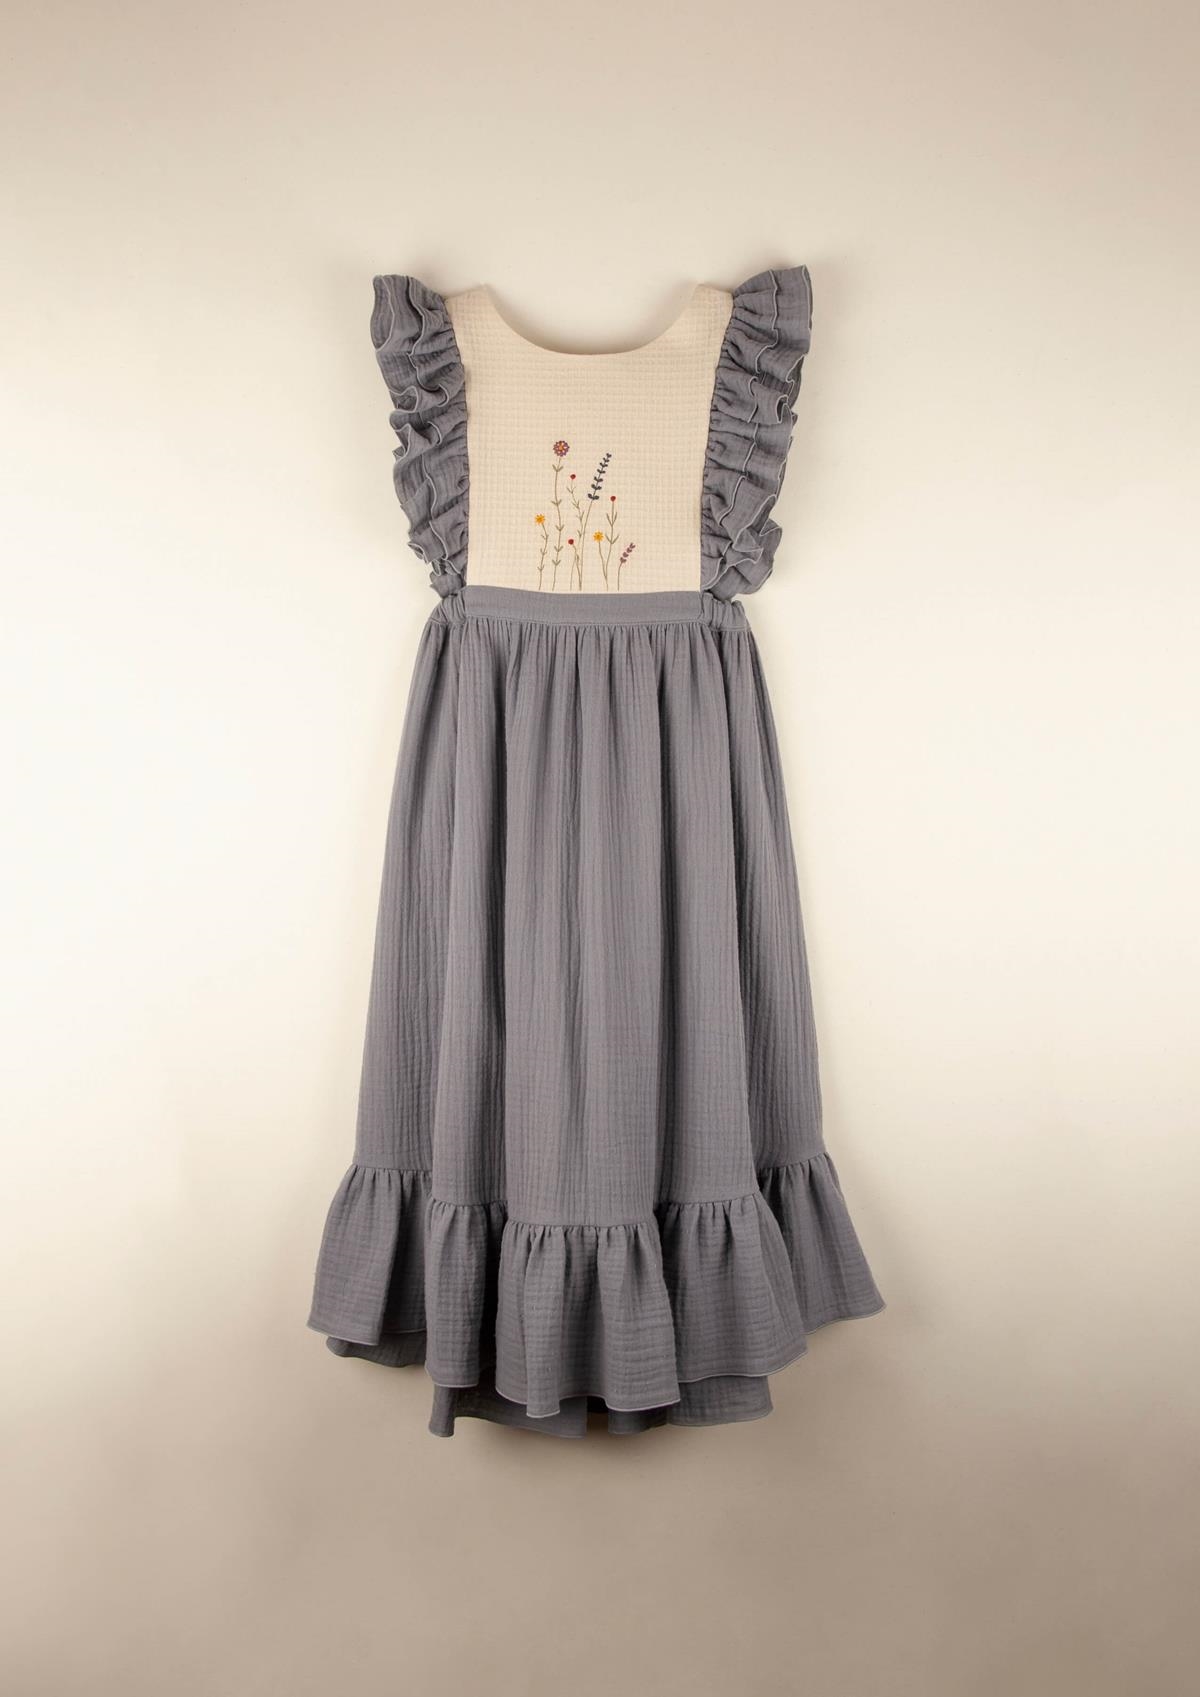 Mod.34.3 Greyish-blue organic bibbed dress with embroidery | SS22 Mod.34.3 Greyish-blue organic bibbed dress with embroidery | 1